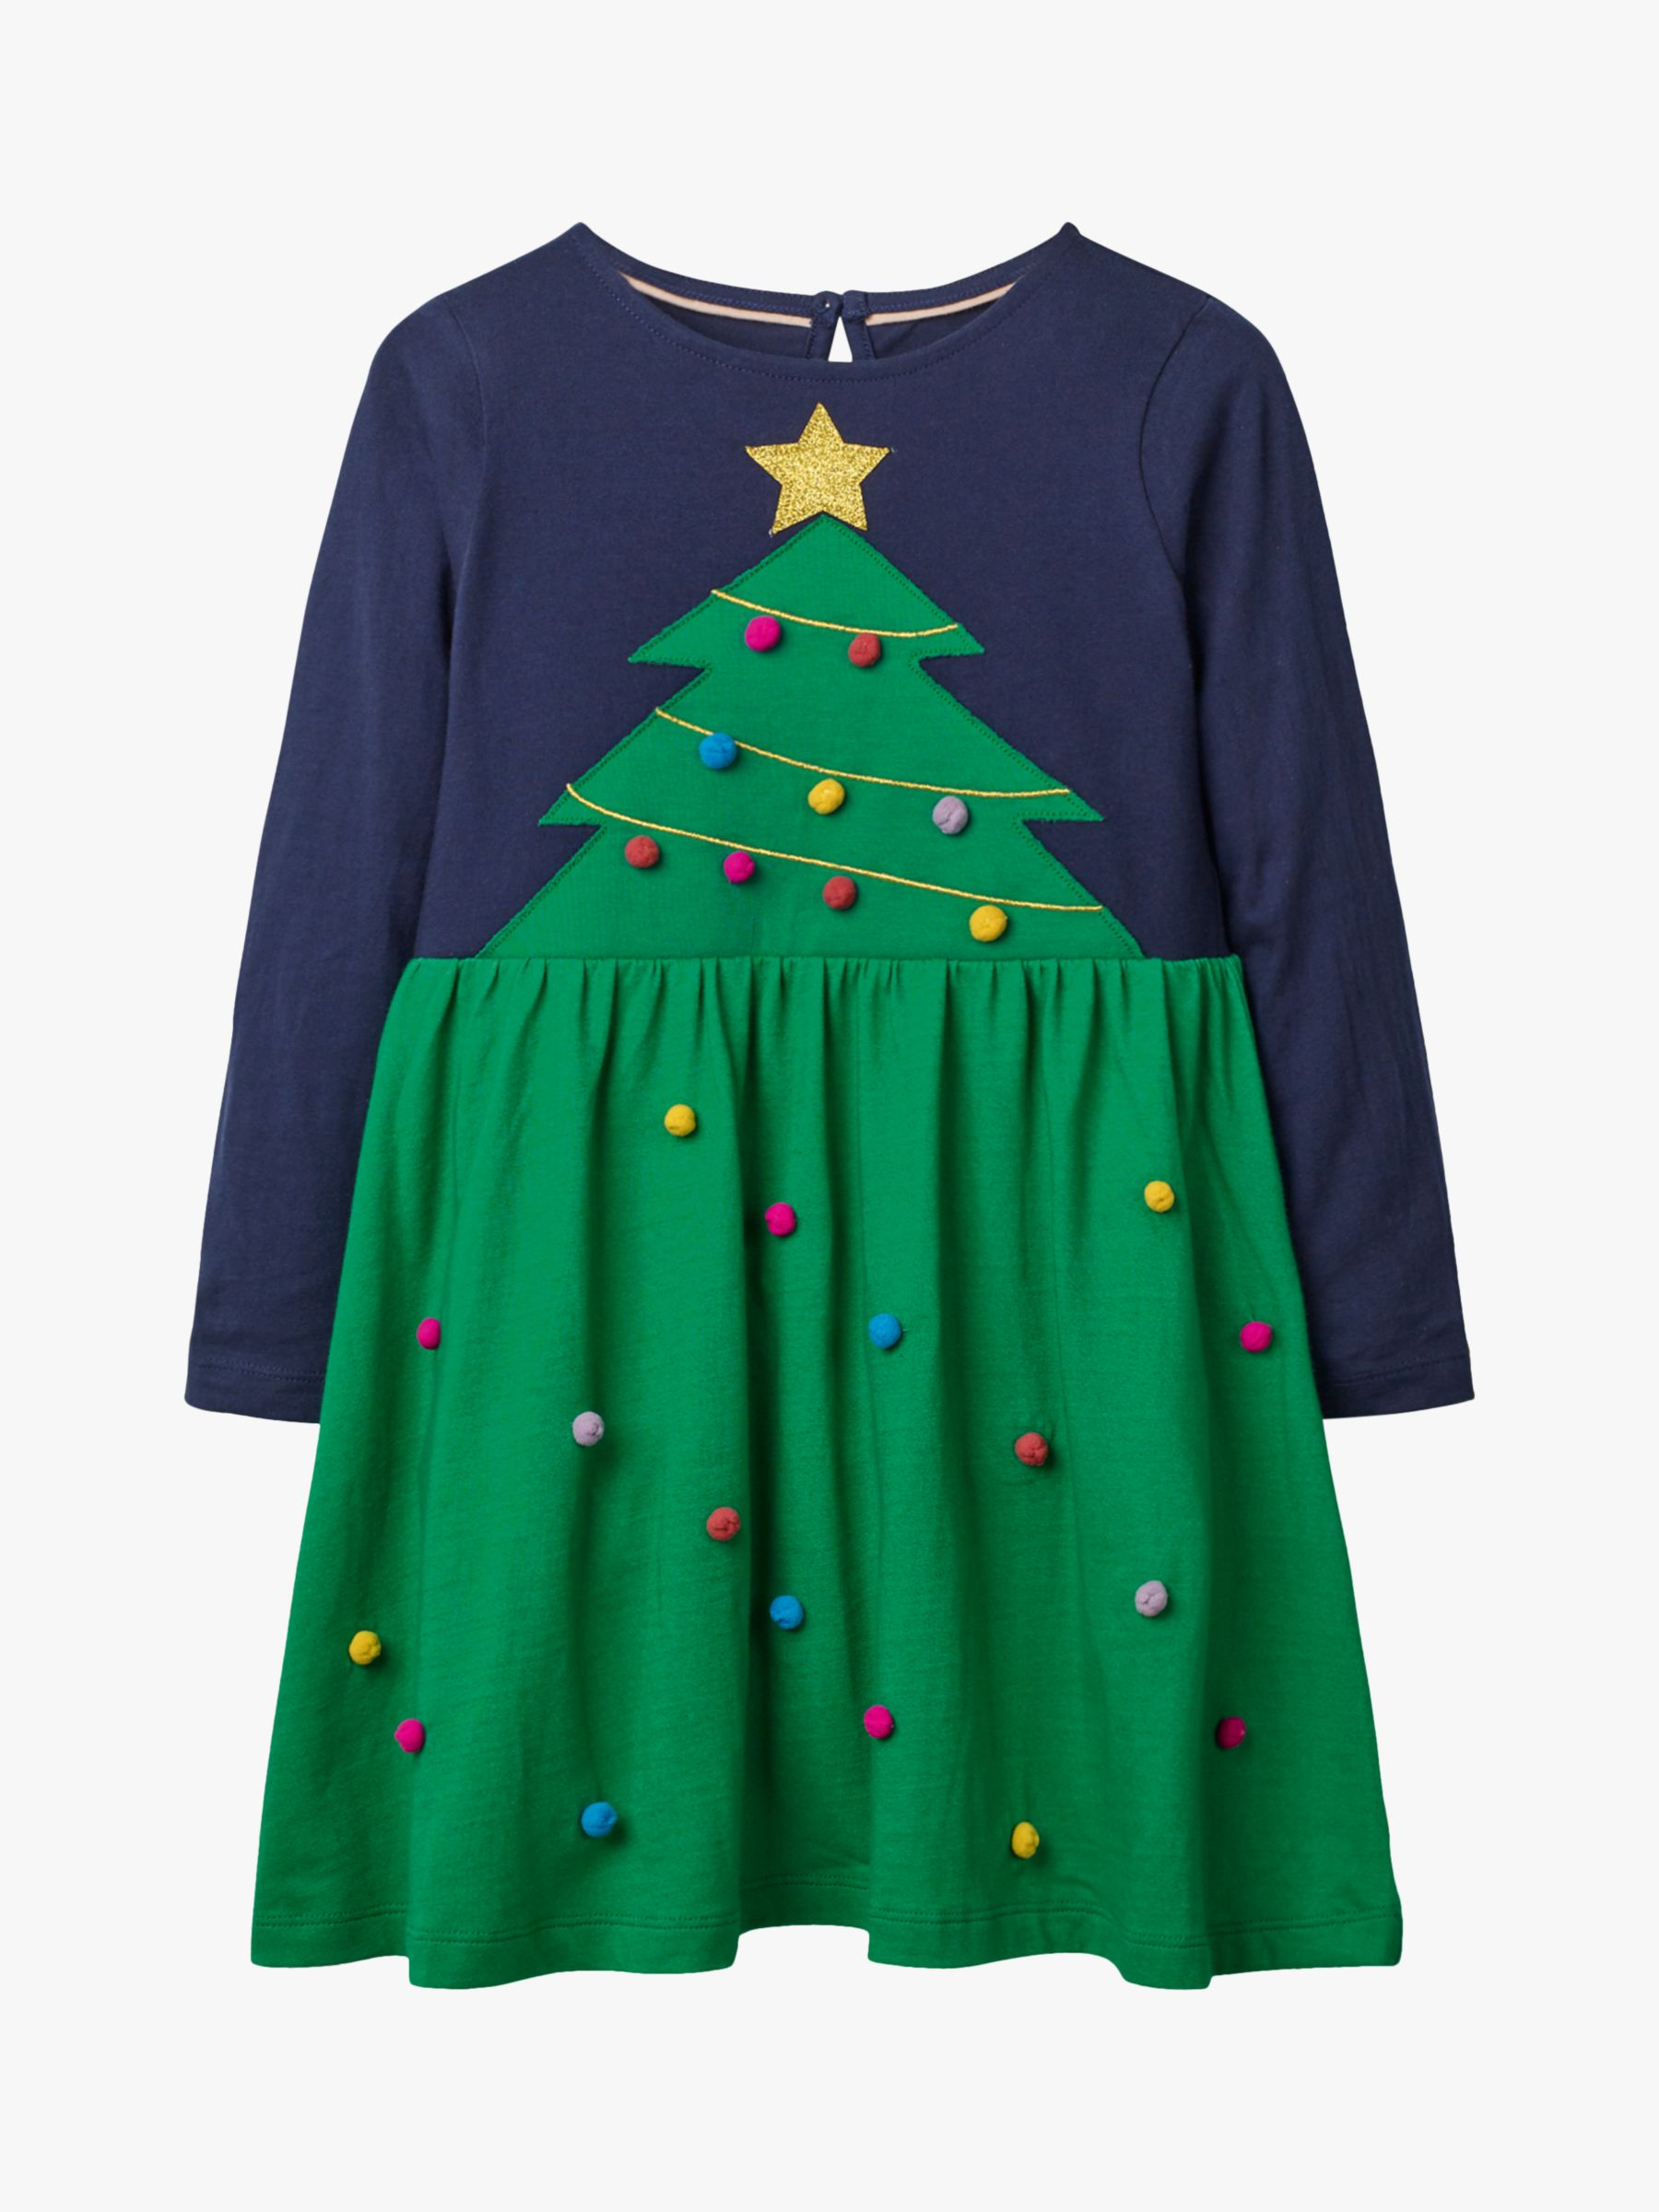 Mini Boden Girls Festive Big Applique Christmas Tree Dress Green Navy At John Lewis Partners